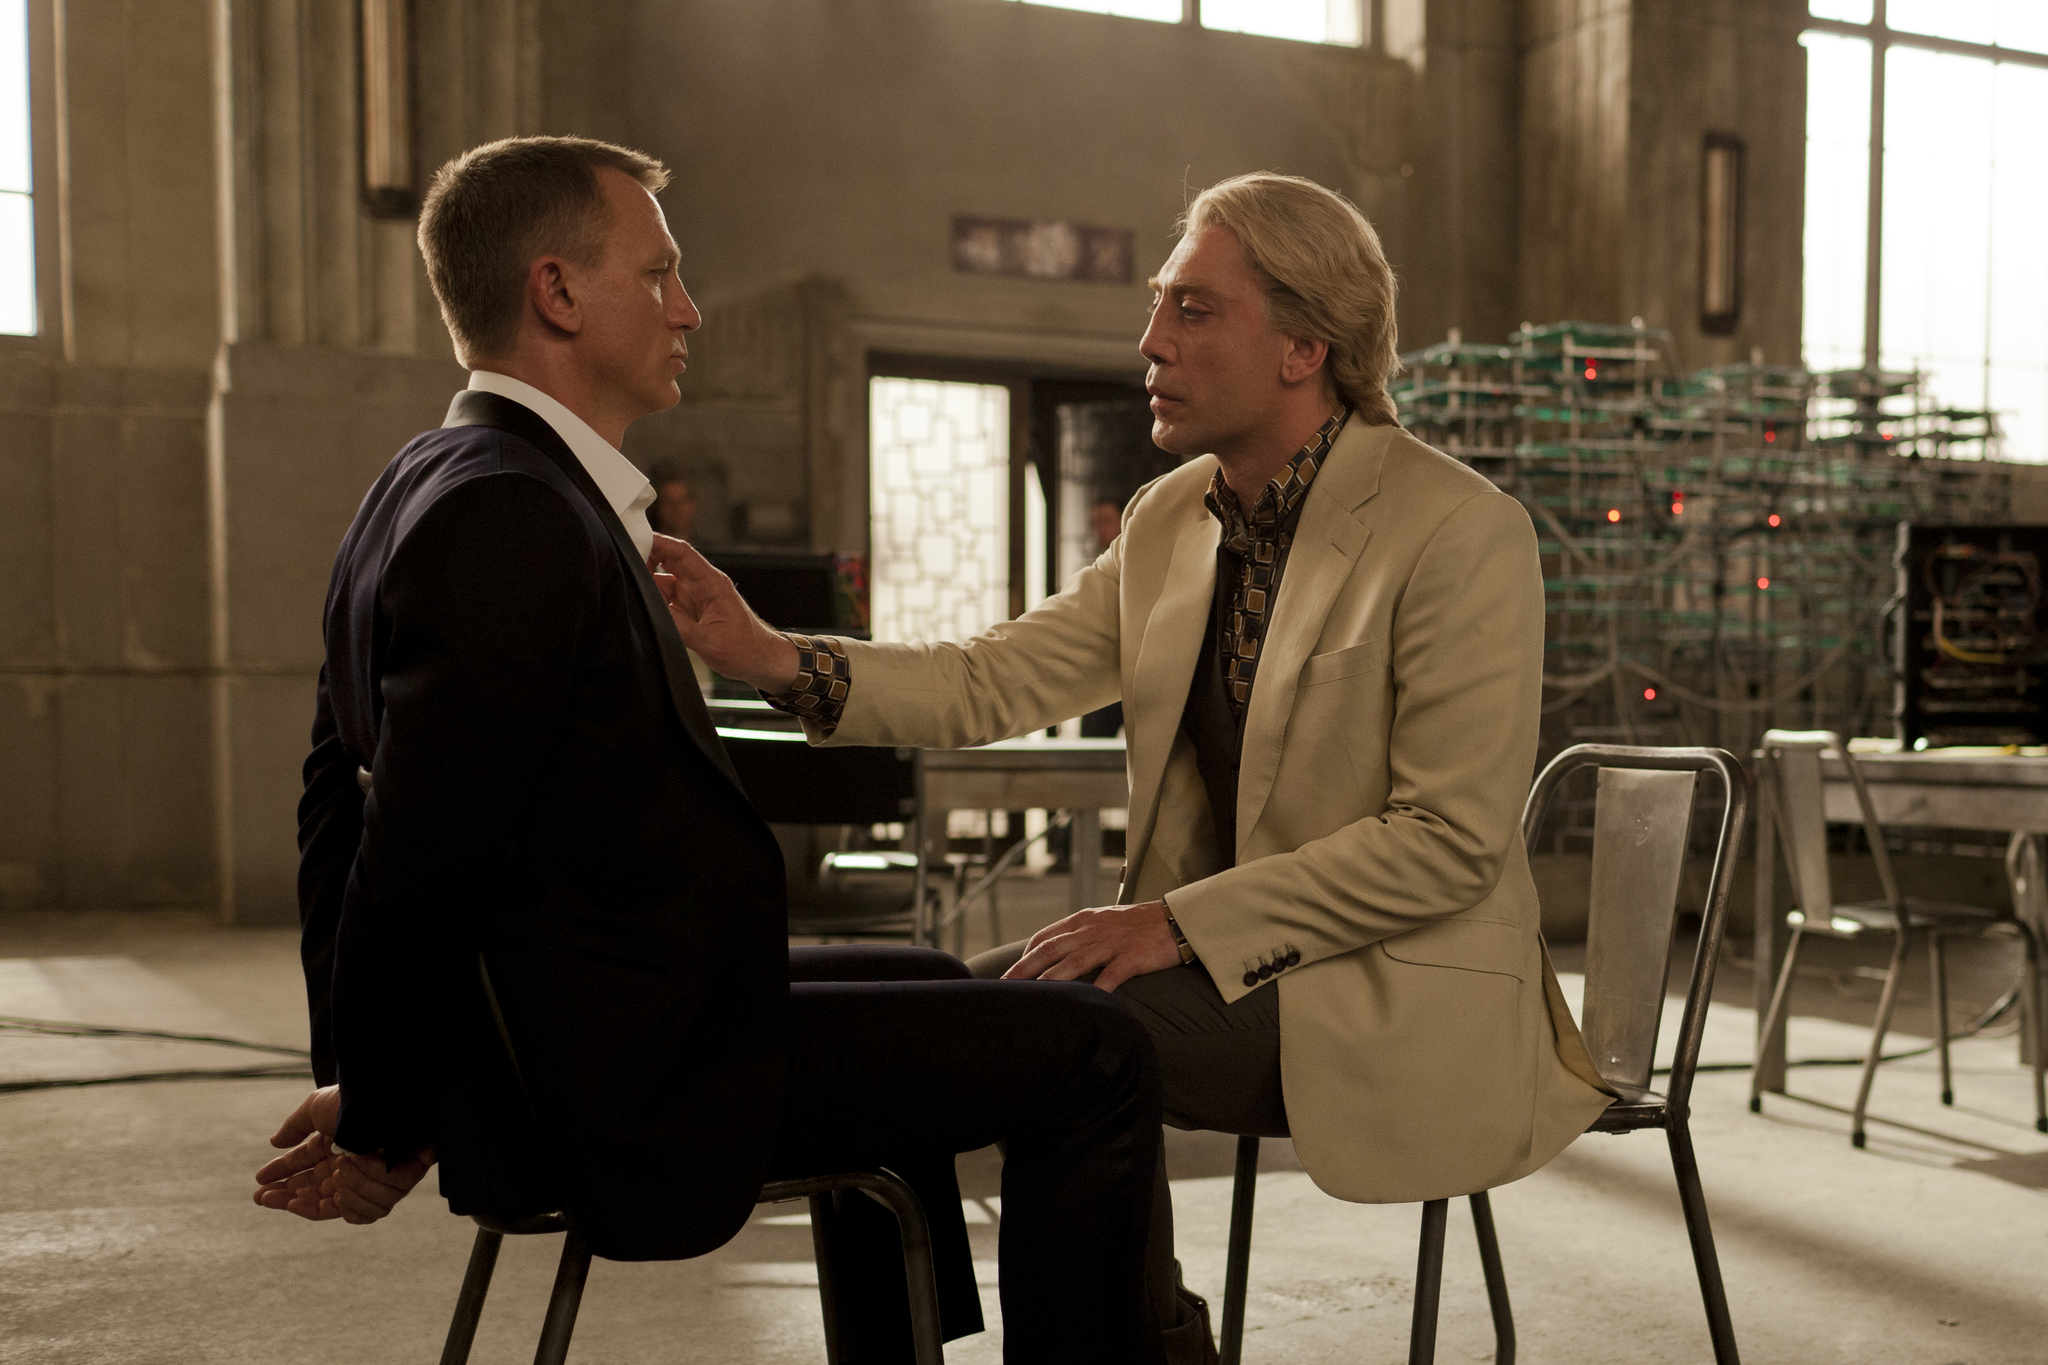 Still of Javier Bardem and Daniel Craig in Operacija Skyfall (2012)